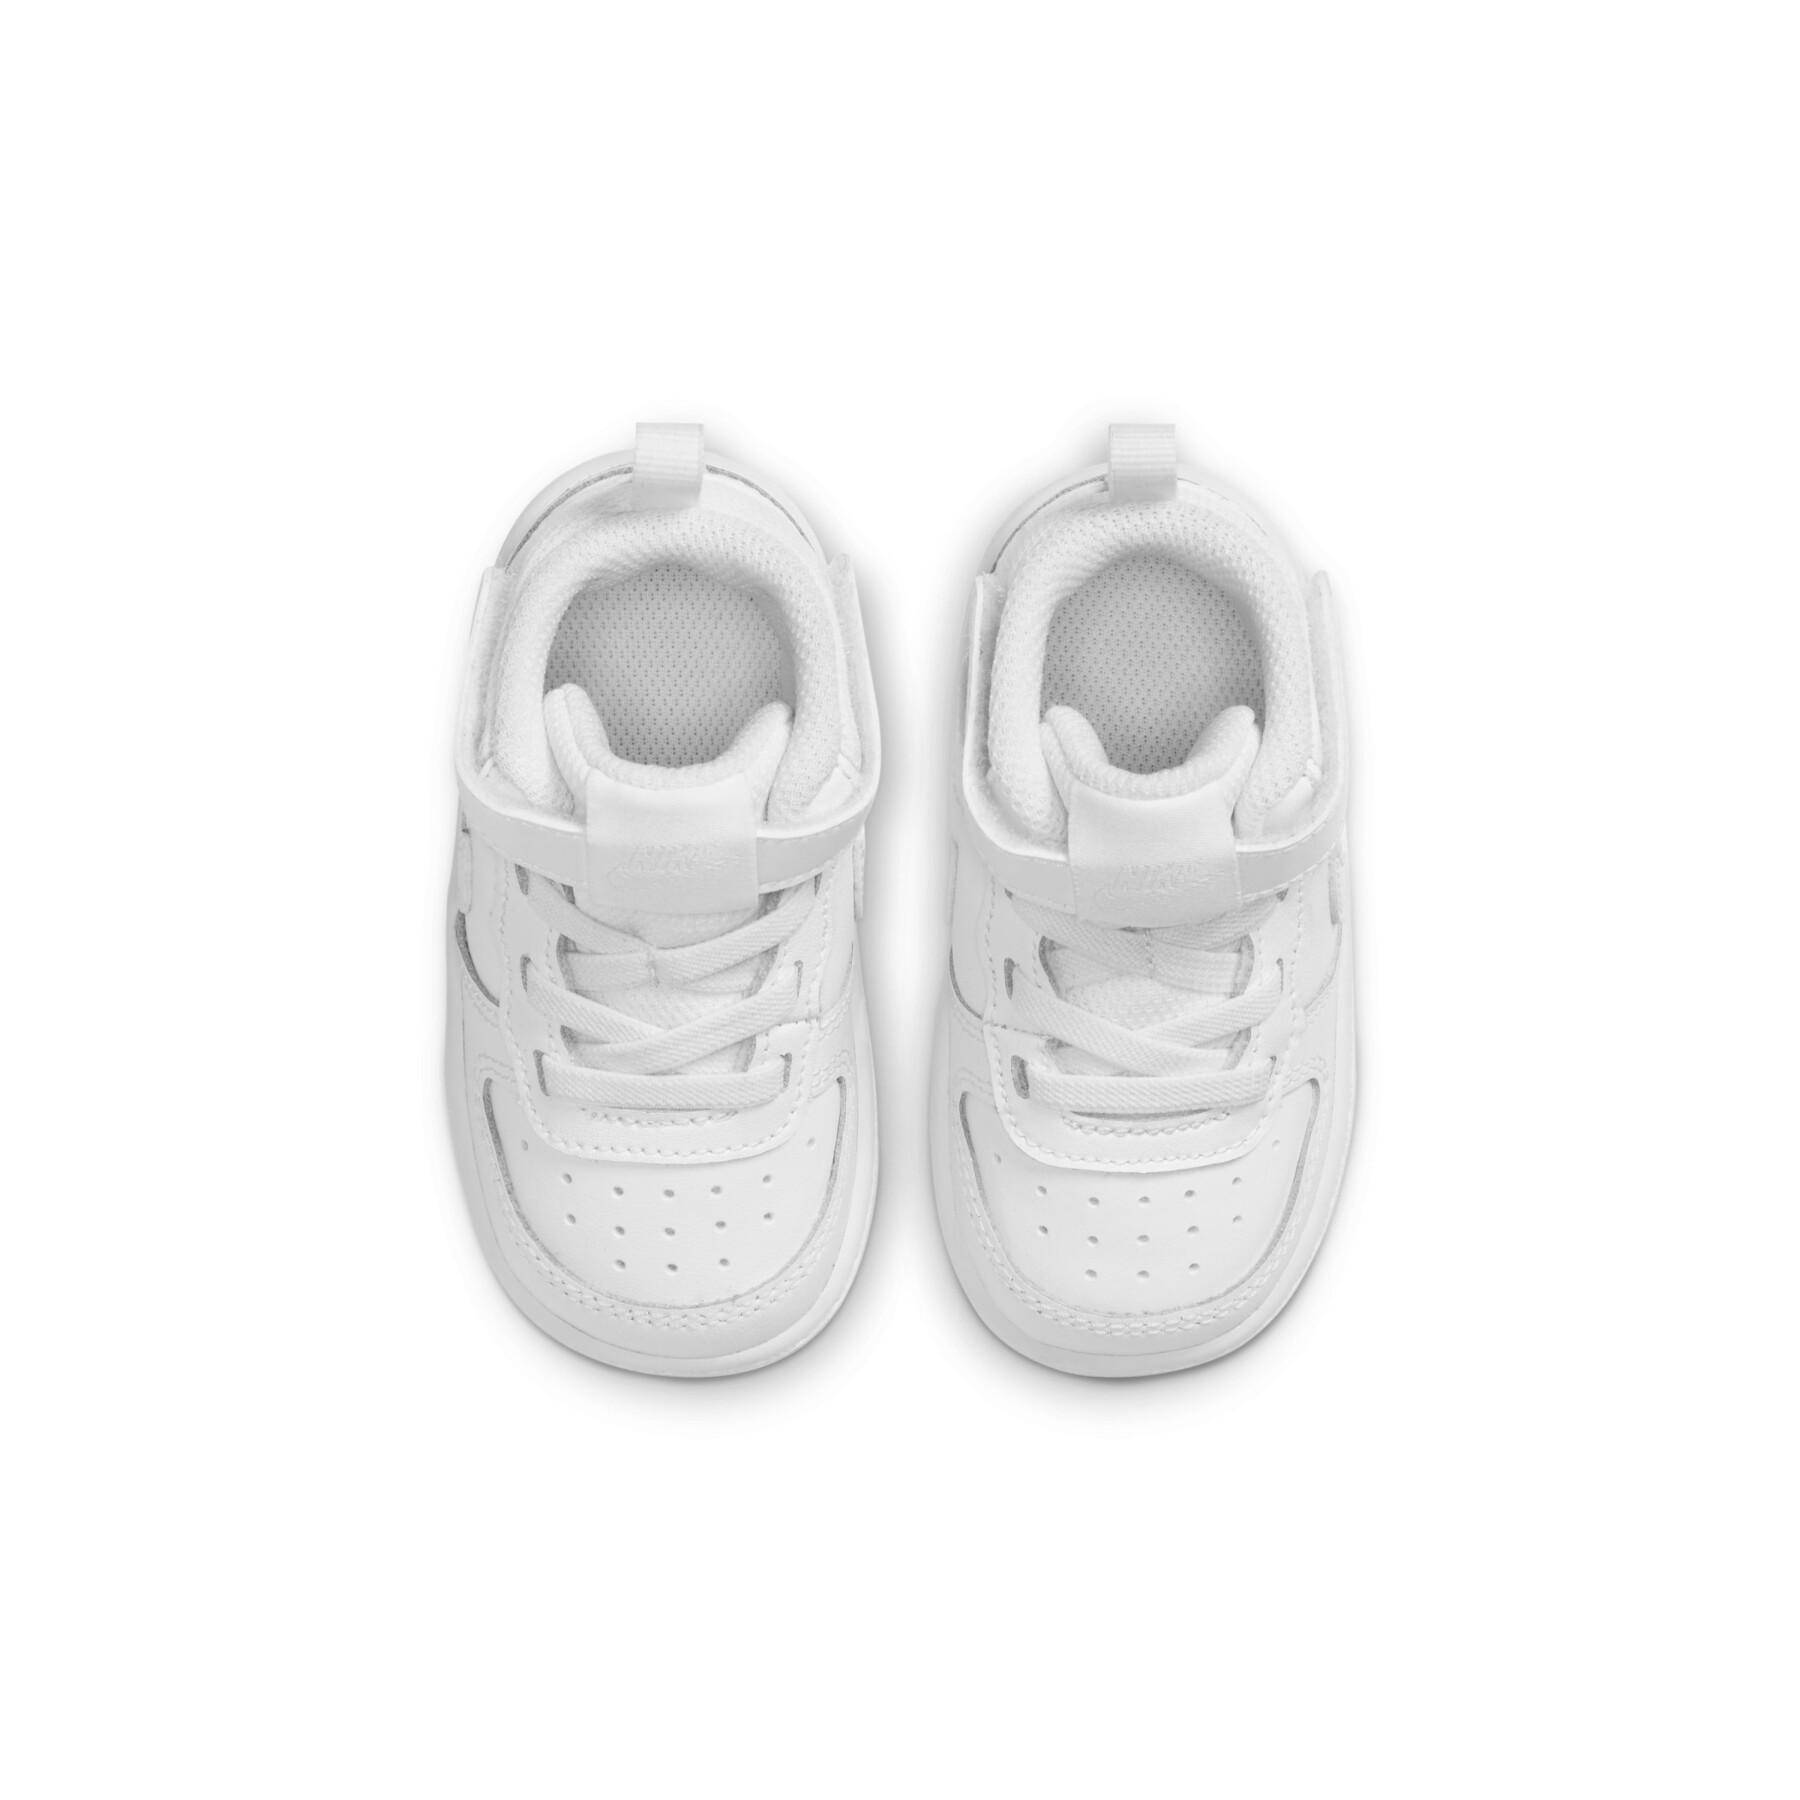 gehandicapt oplichterij dood gaan Baby shoes Nike Court Borough Mid 2 - Nike - Brands - Lifestyle